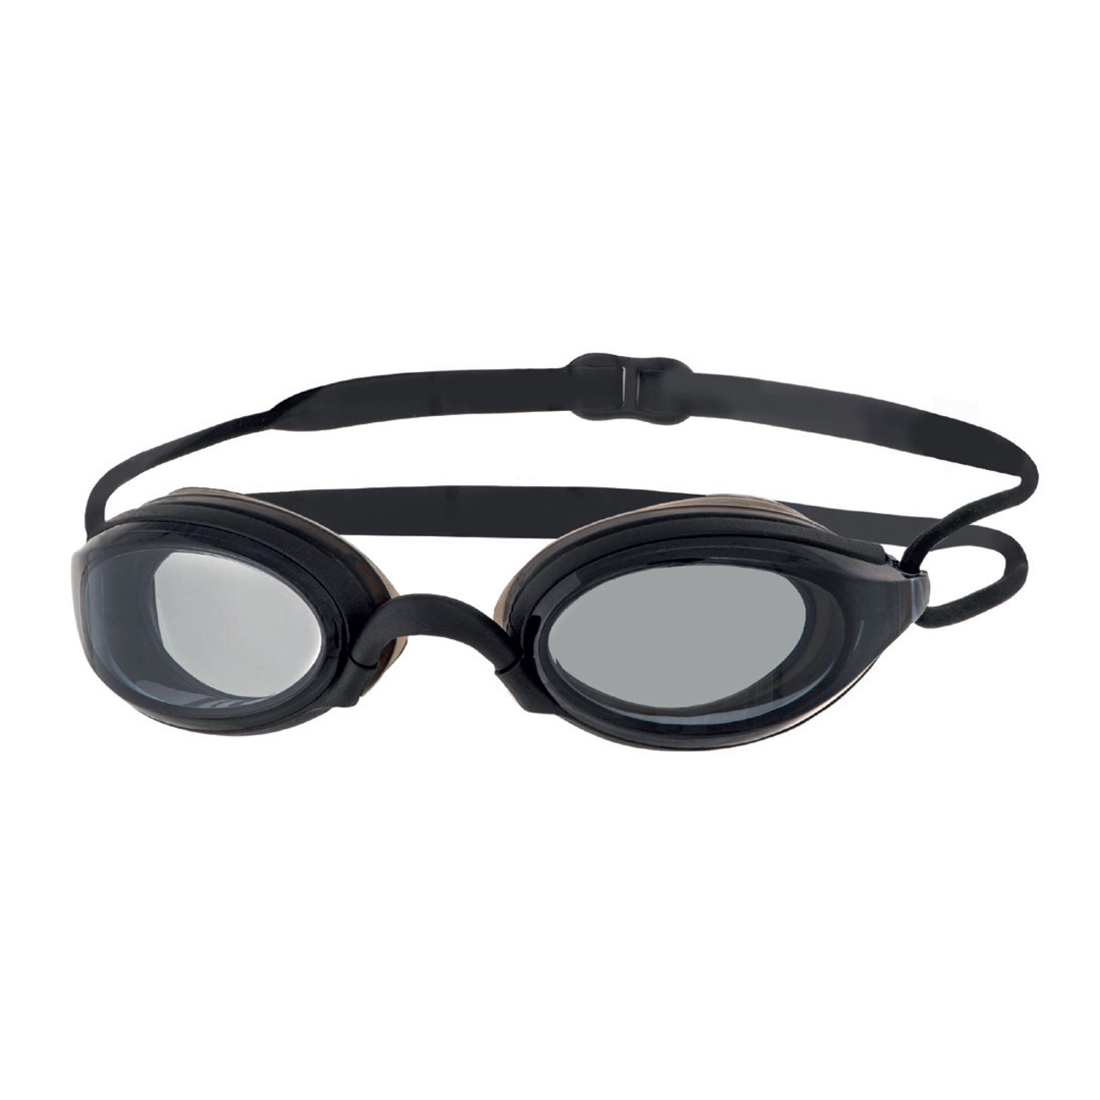 Zoggs Fusion air donkere lens zwembril zwart  461012-BKBKTSM-11TW